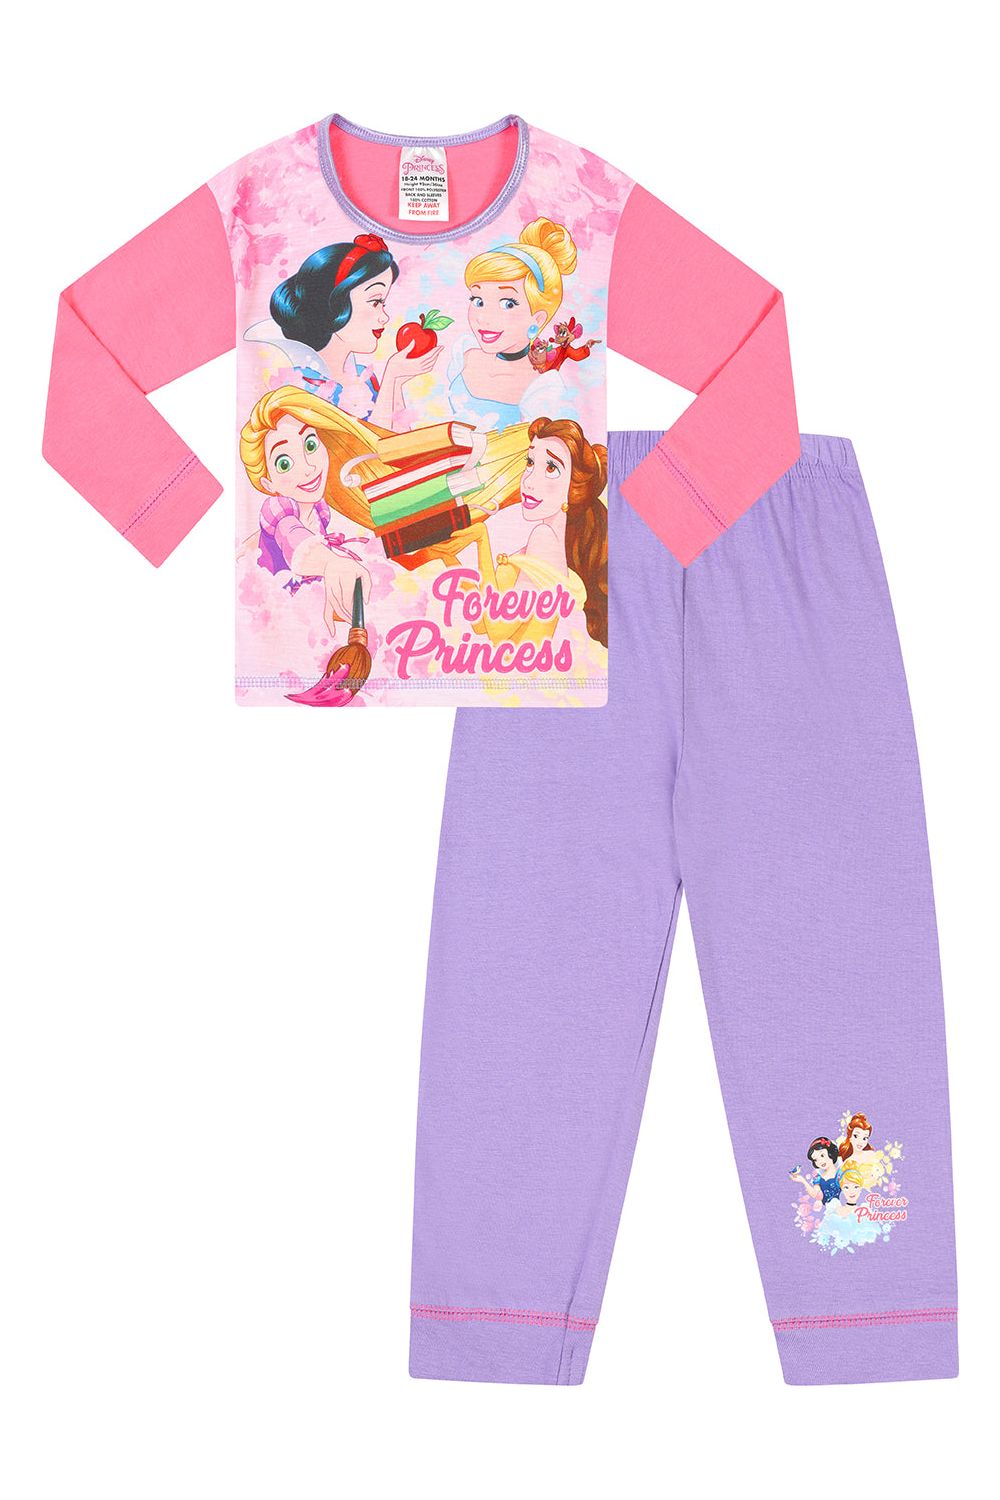 Girls Disney Princess 'Forever Princess' Pyjamas